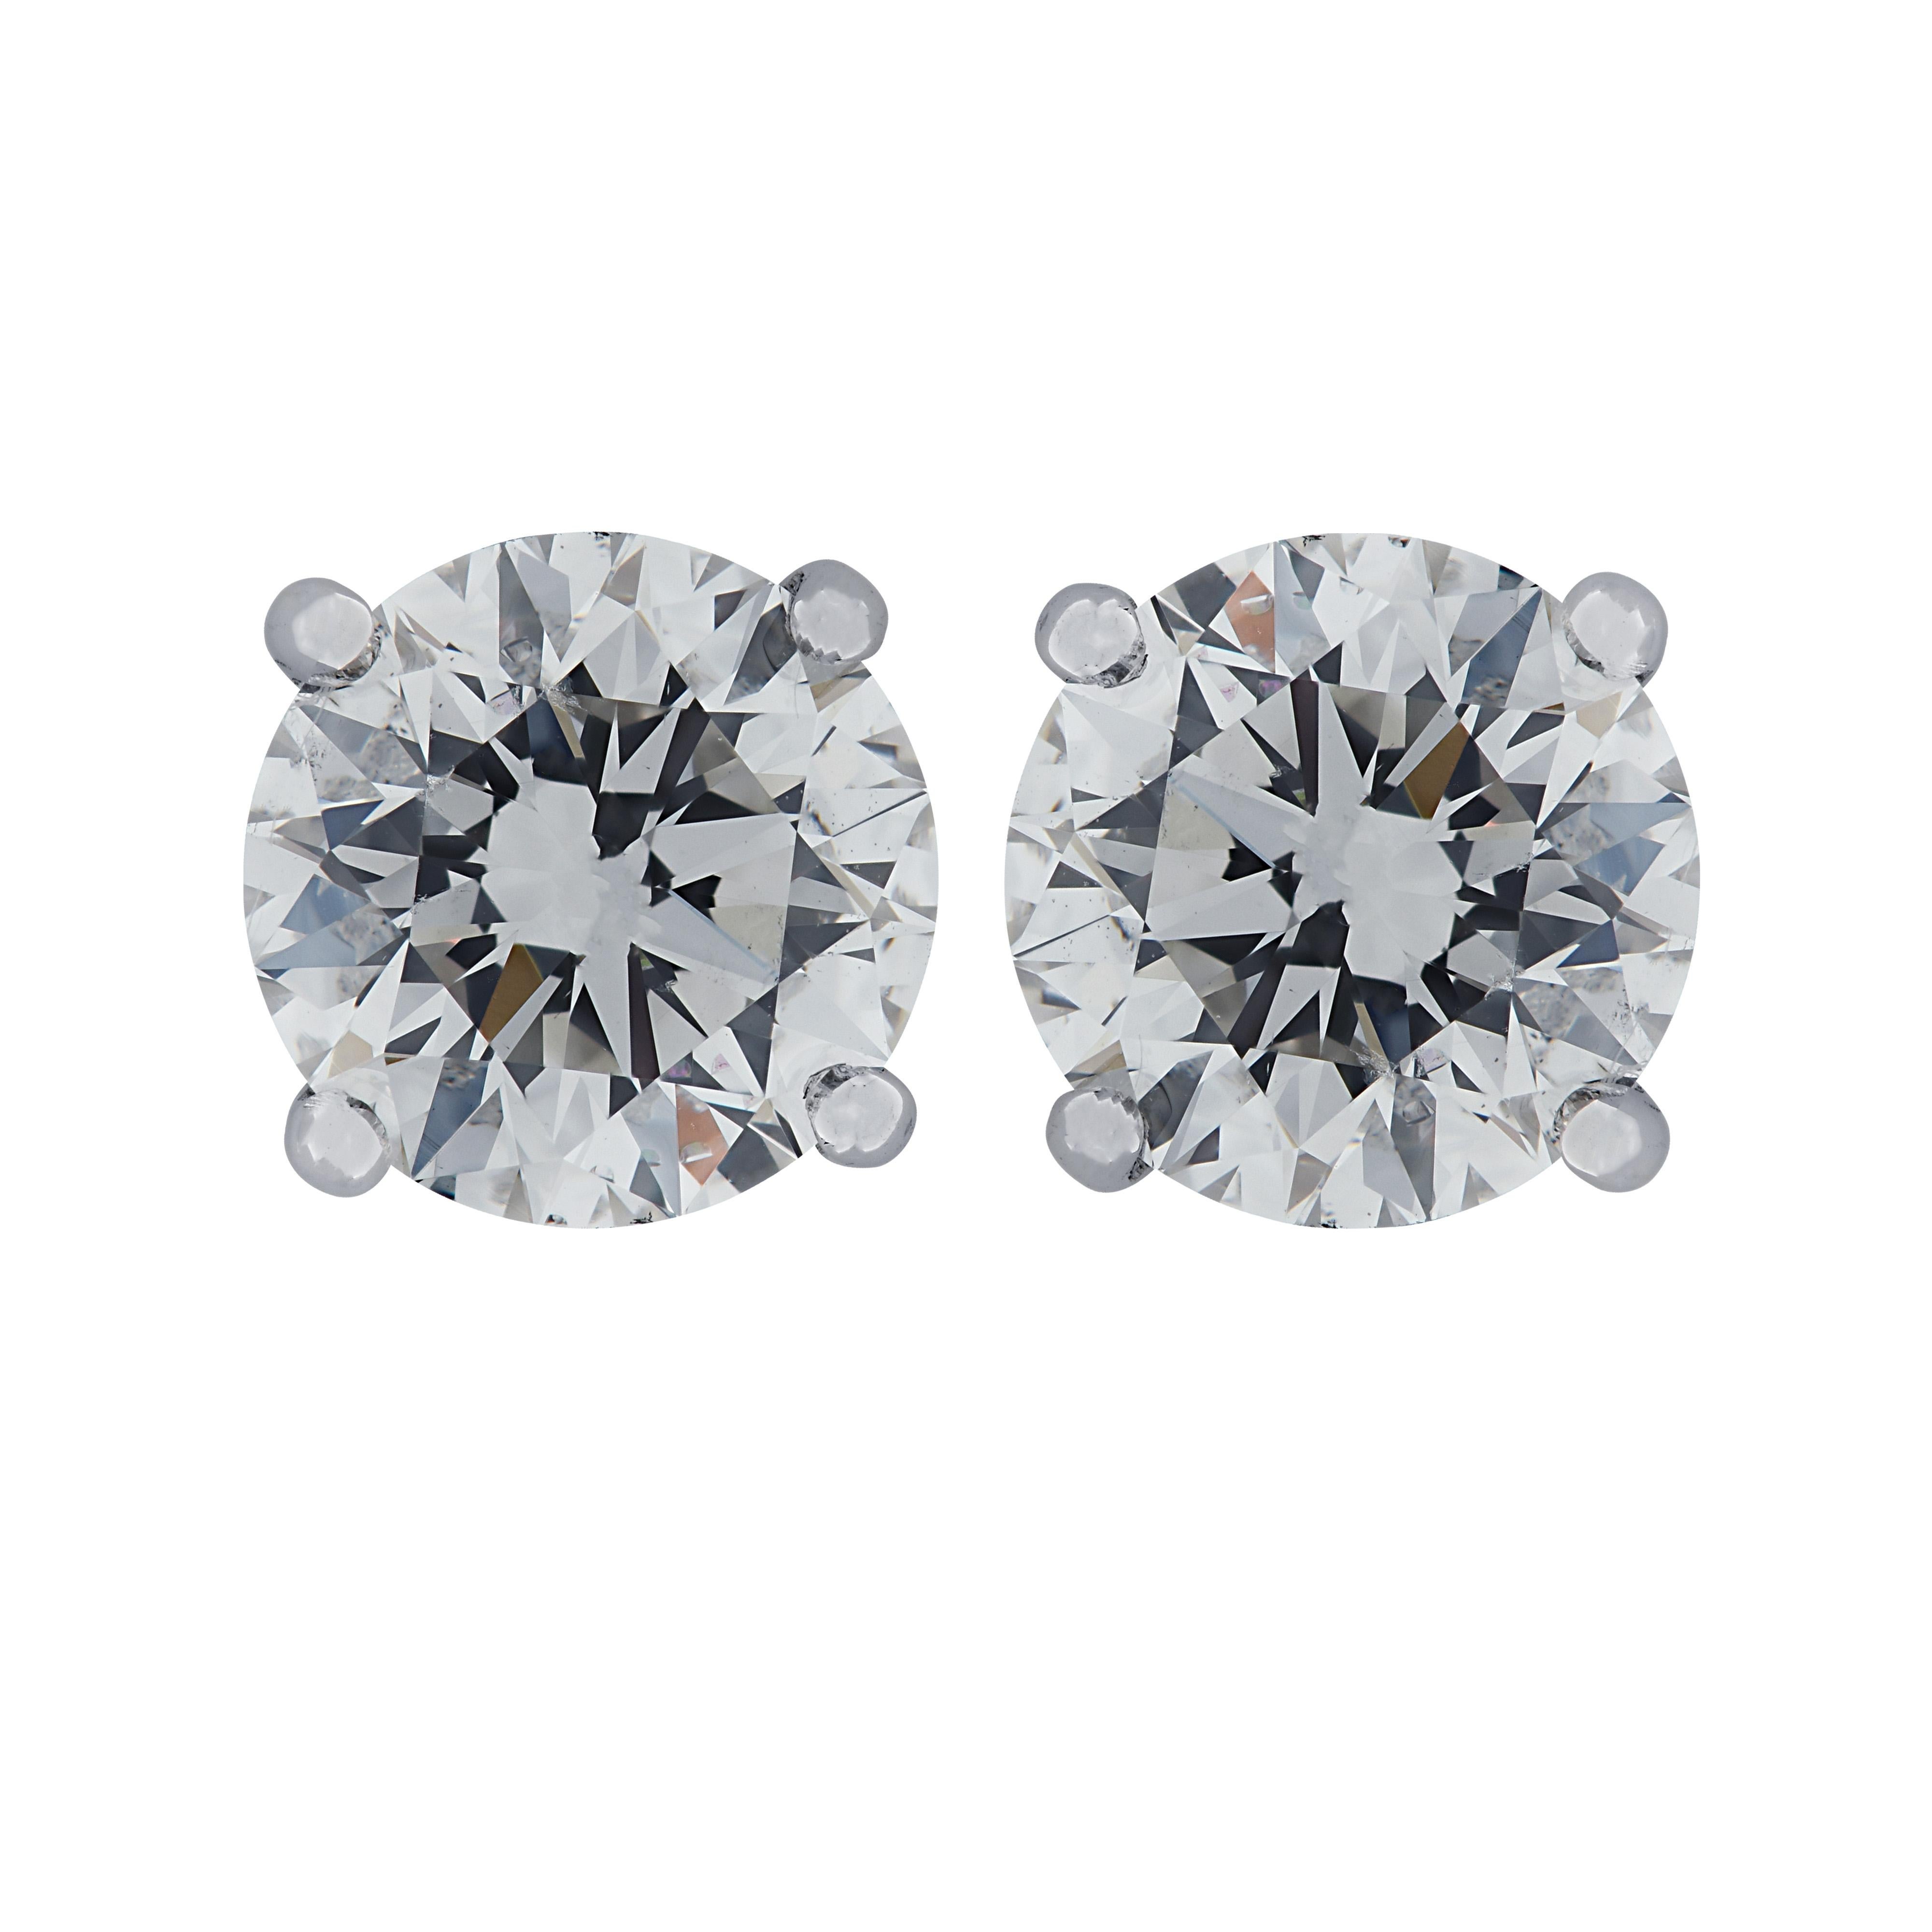 Modern Vivid Diamonds 3.11 Carat Diamond Stud Earrings